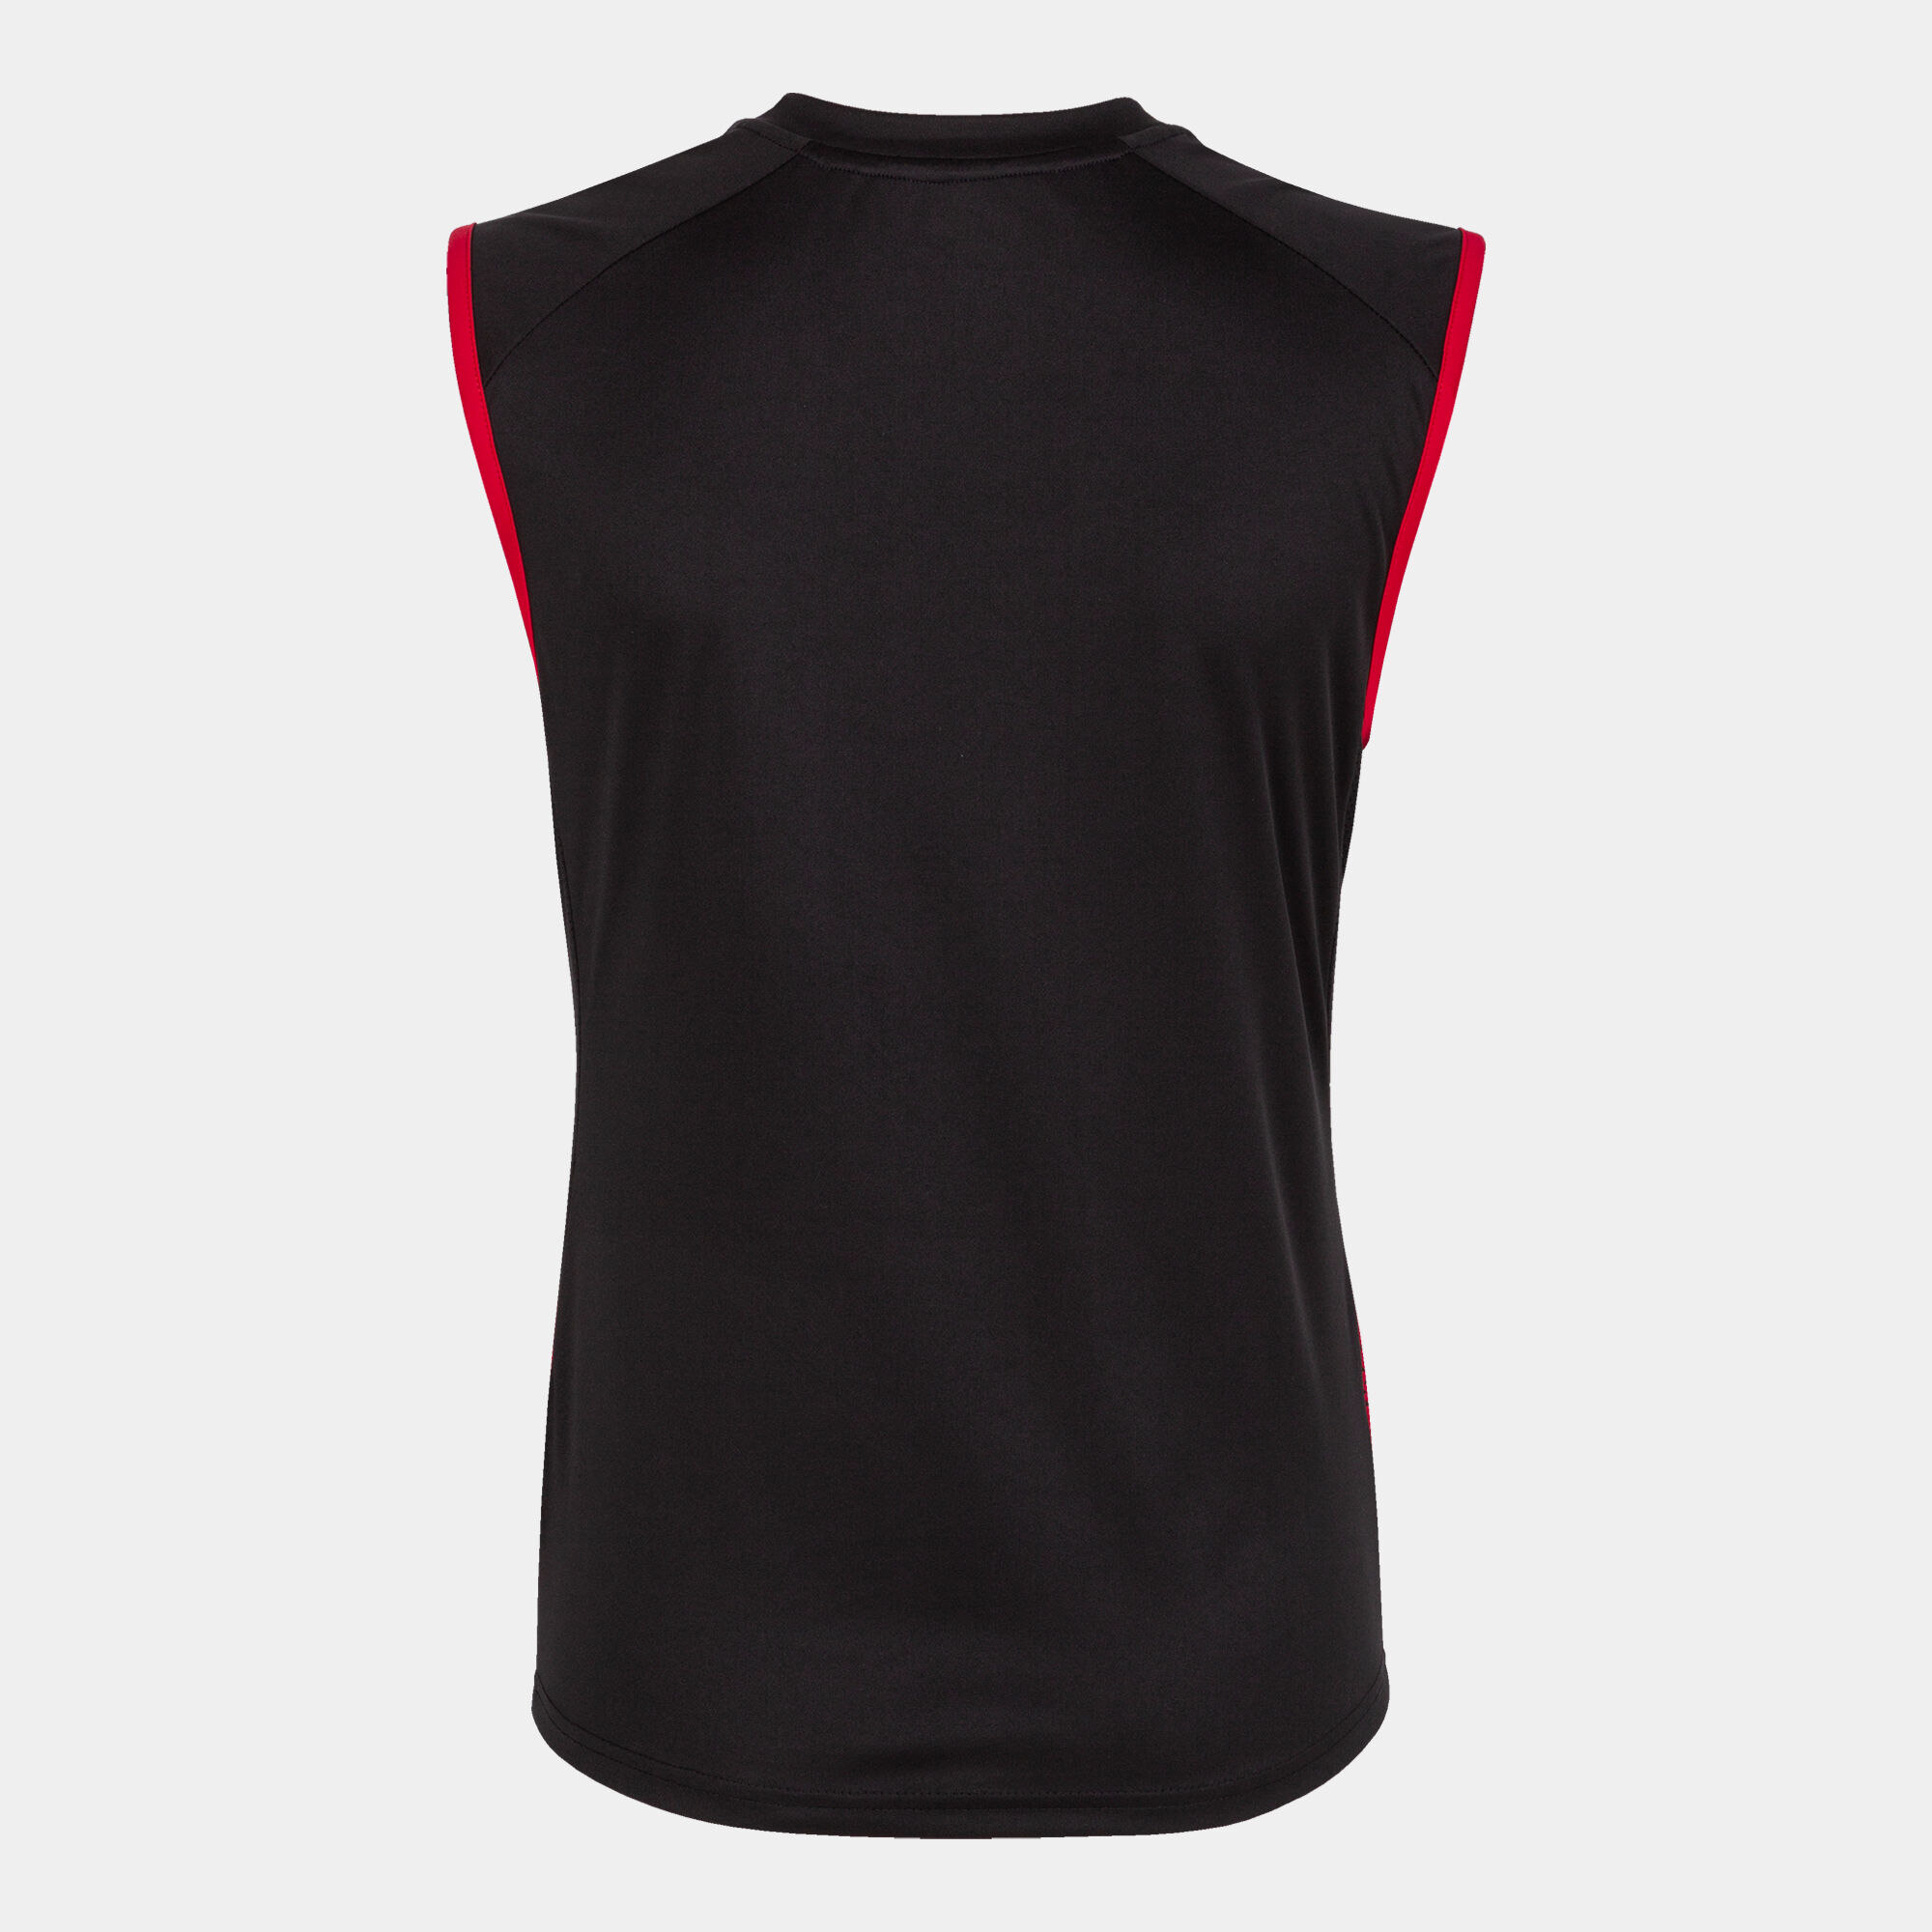 Camiseta sin mangas mujer Supernova III negro rojo